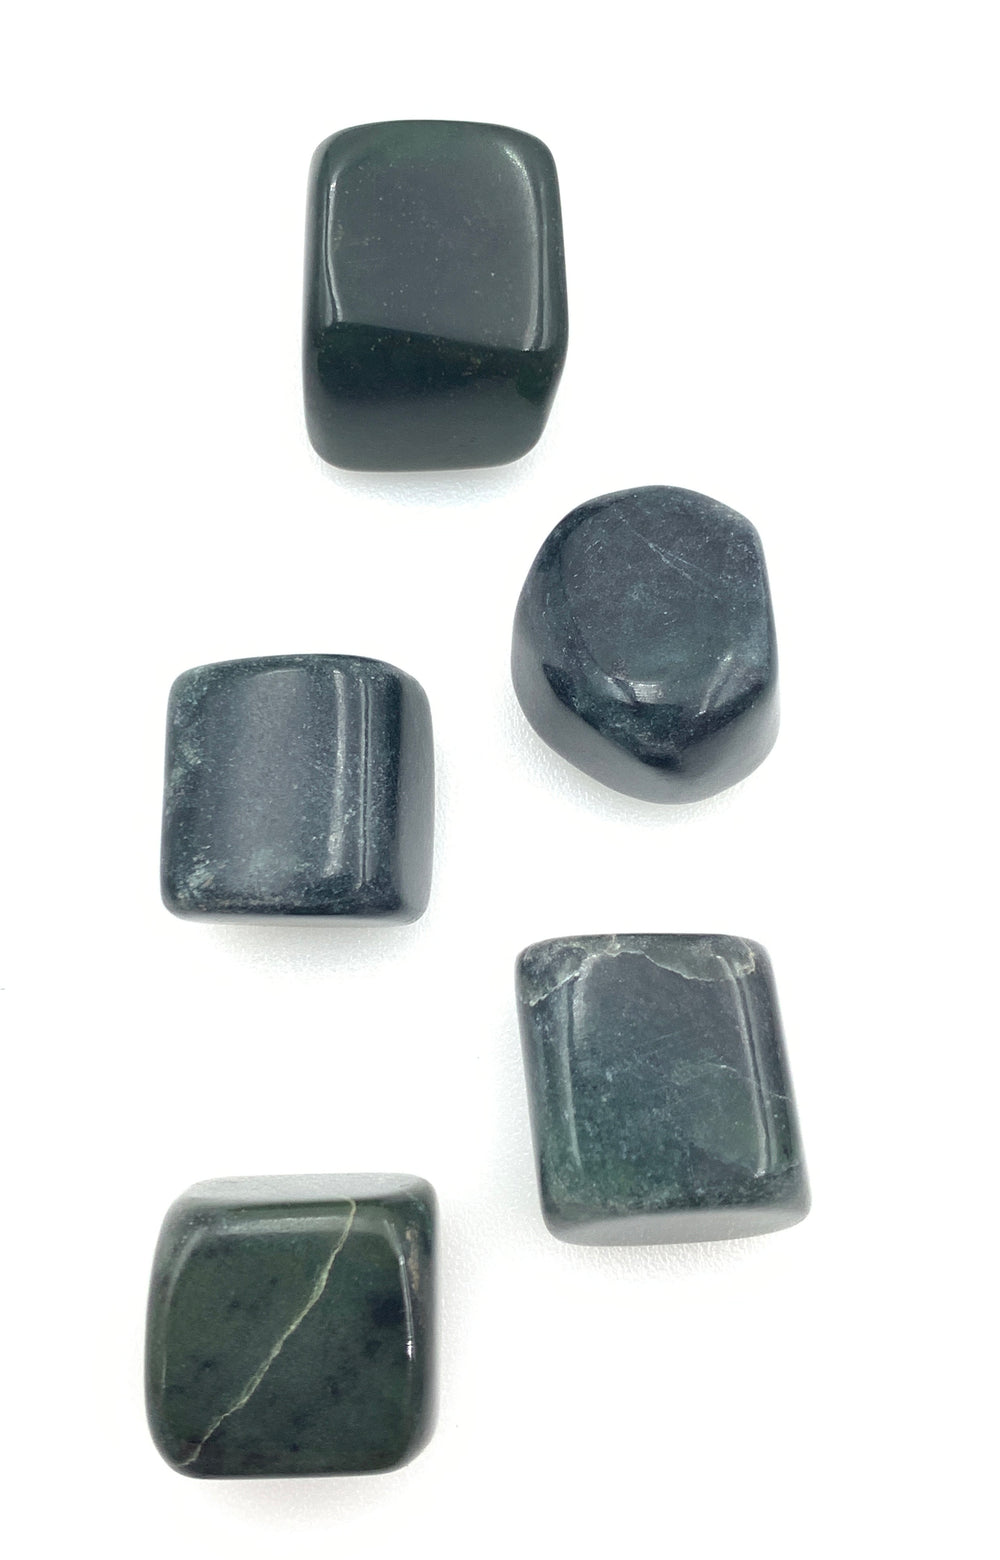 Nephrite Jade (1) Tumbled Stone